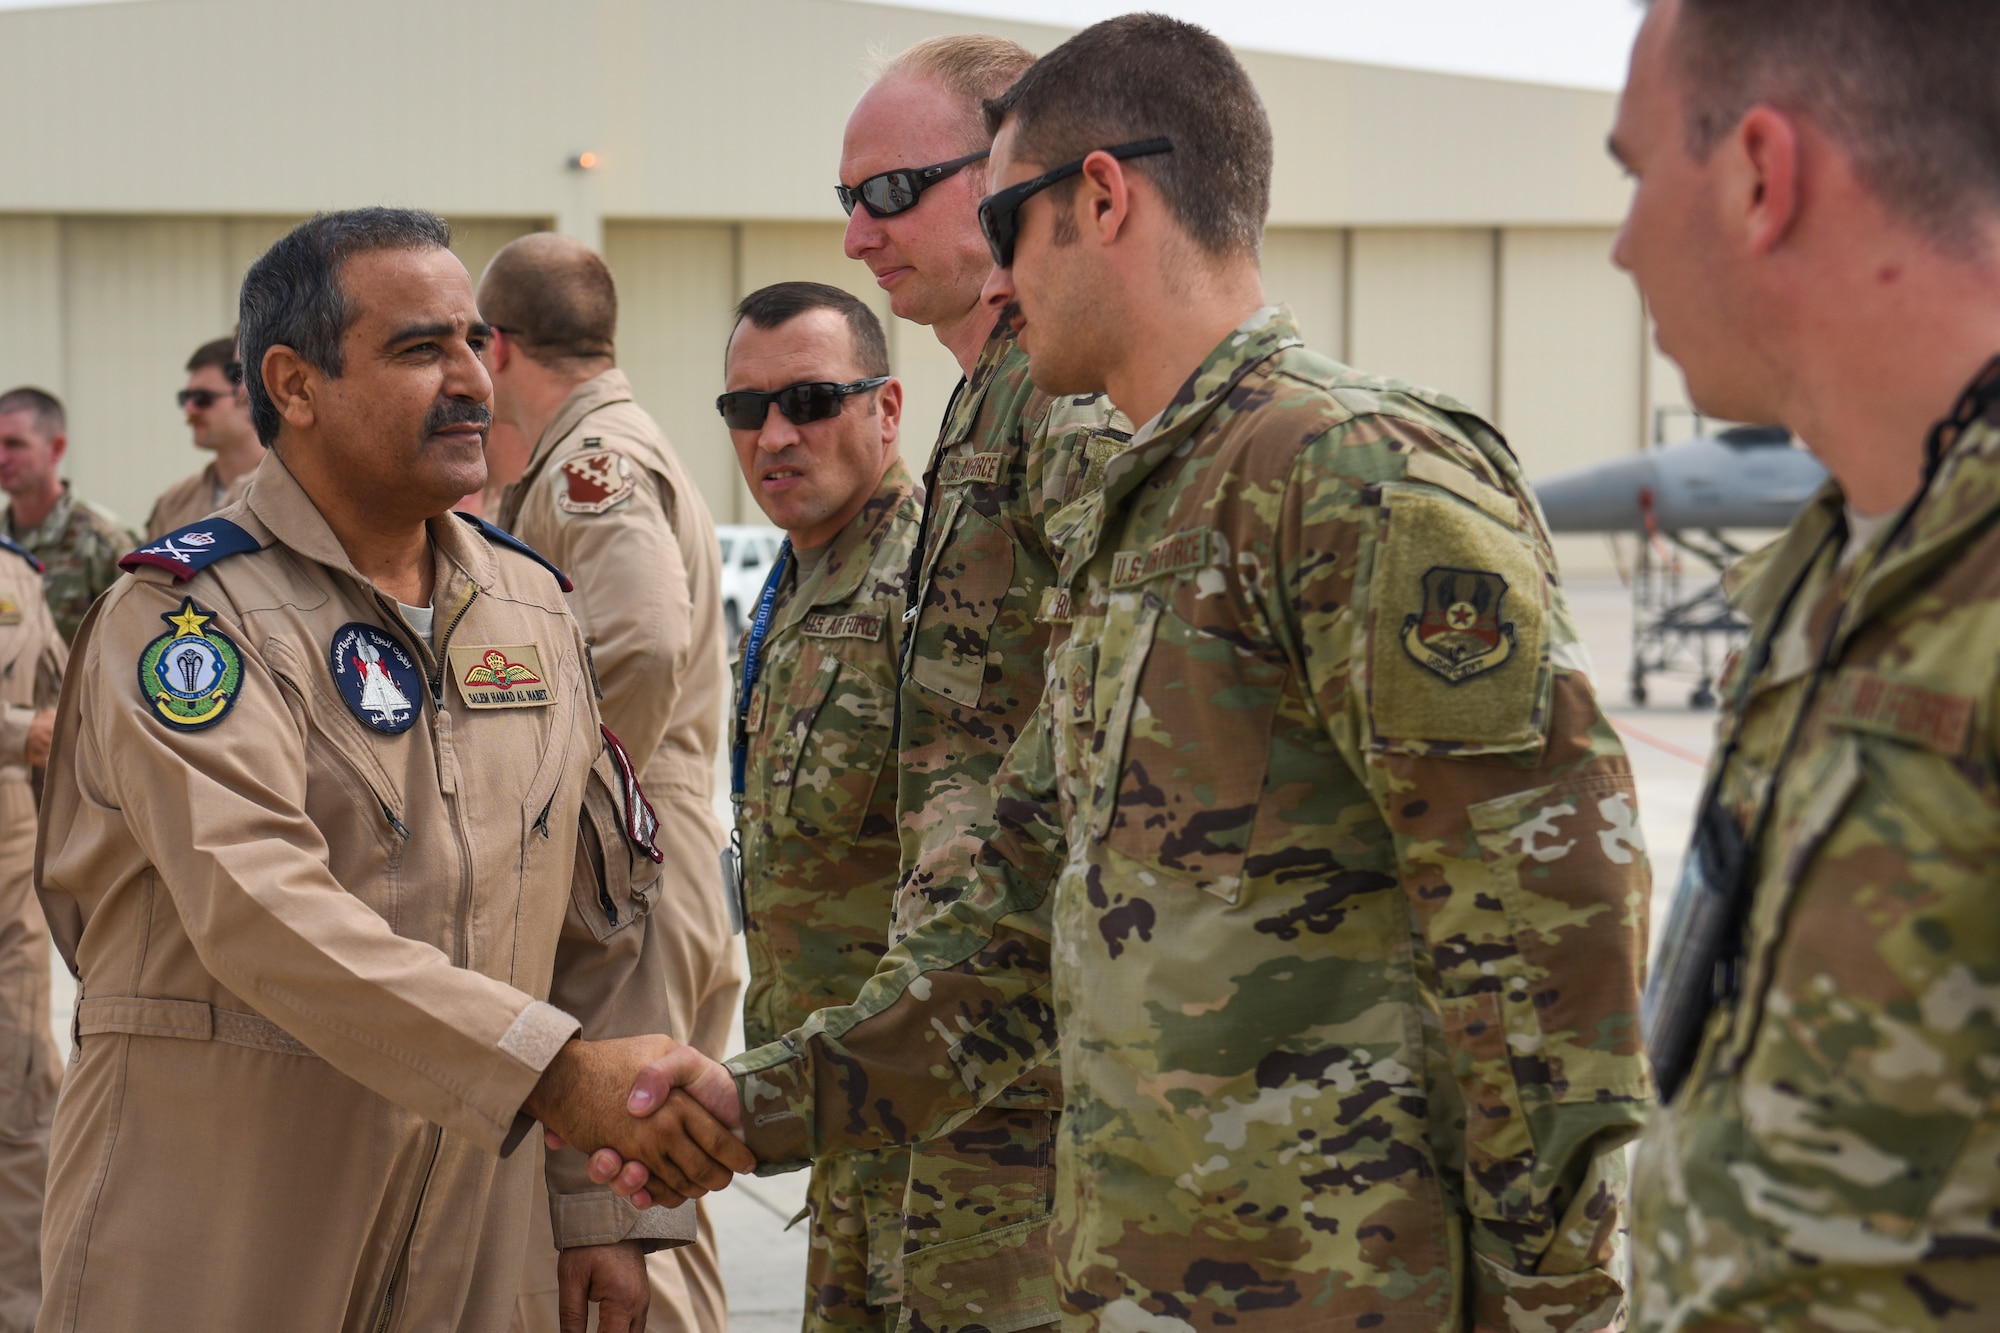 The Commander of the Qatar Emiri Air Force, Staff MG Pilot Salem Bin Hamad Al-Nabet, shakes hands with U.S. Airmen during a visit to Al Udeid Air Base Qatar, Nov 10, 2019.